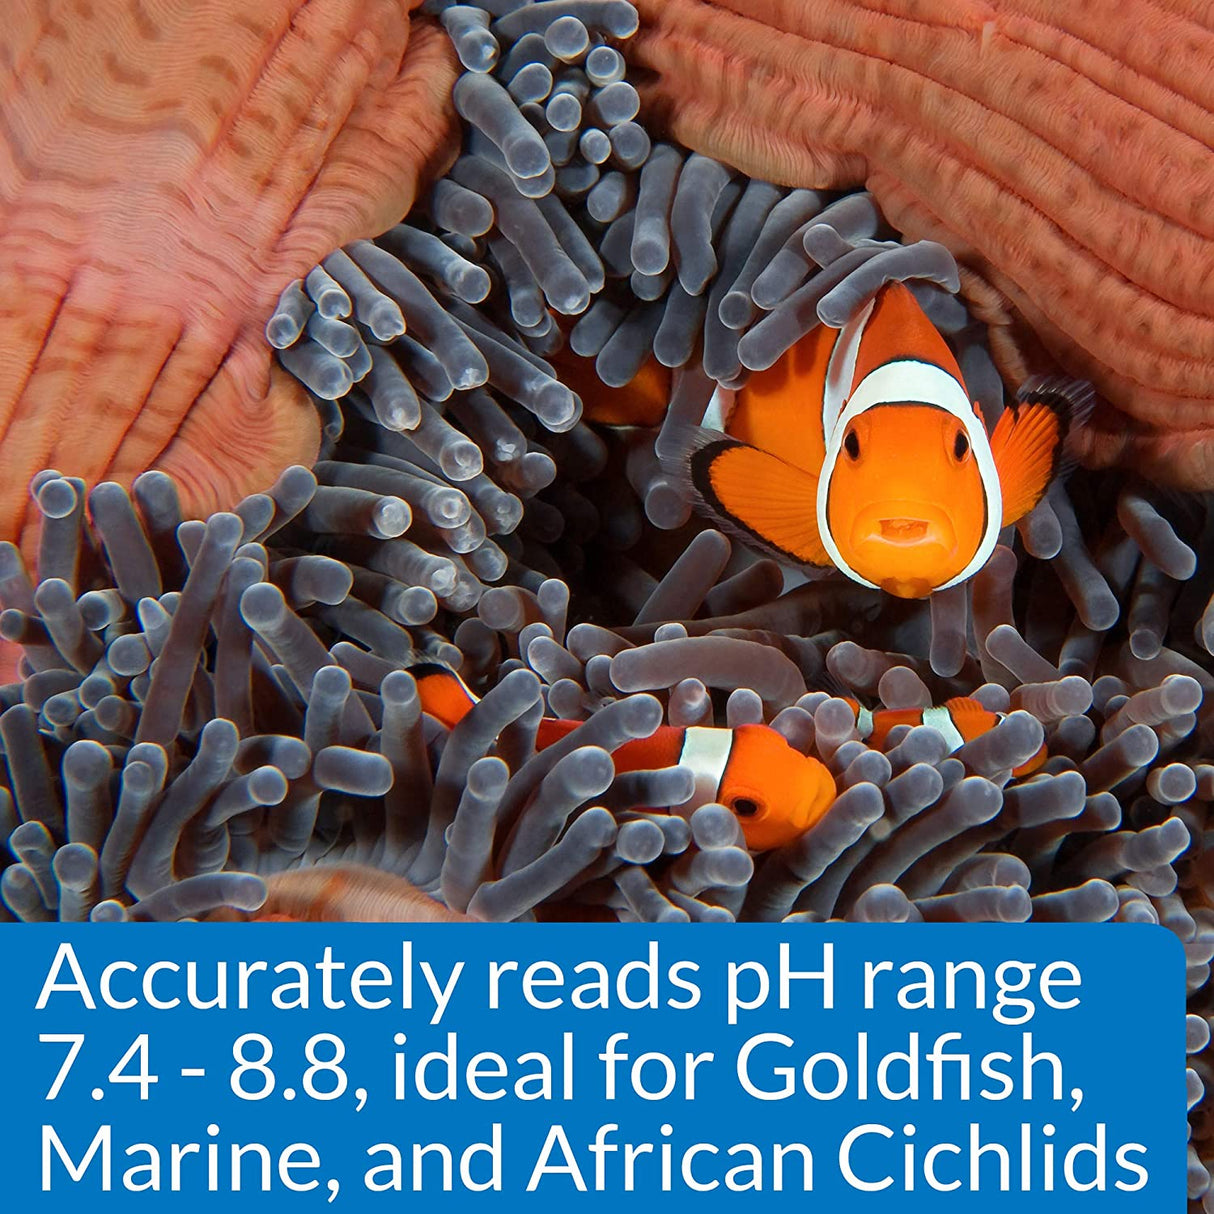 1 count API High Range pH Test Kit for Goldfish, Marine and African Cichlids